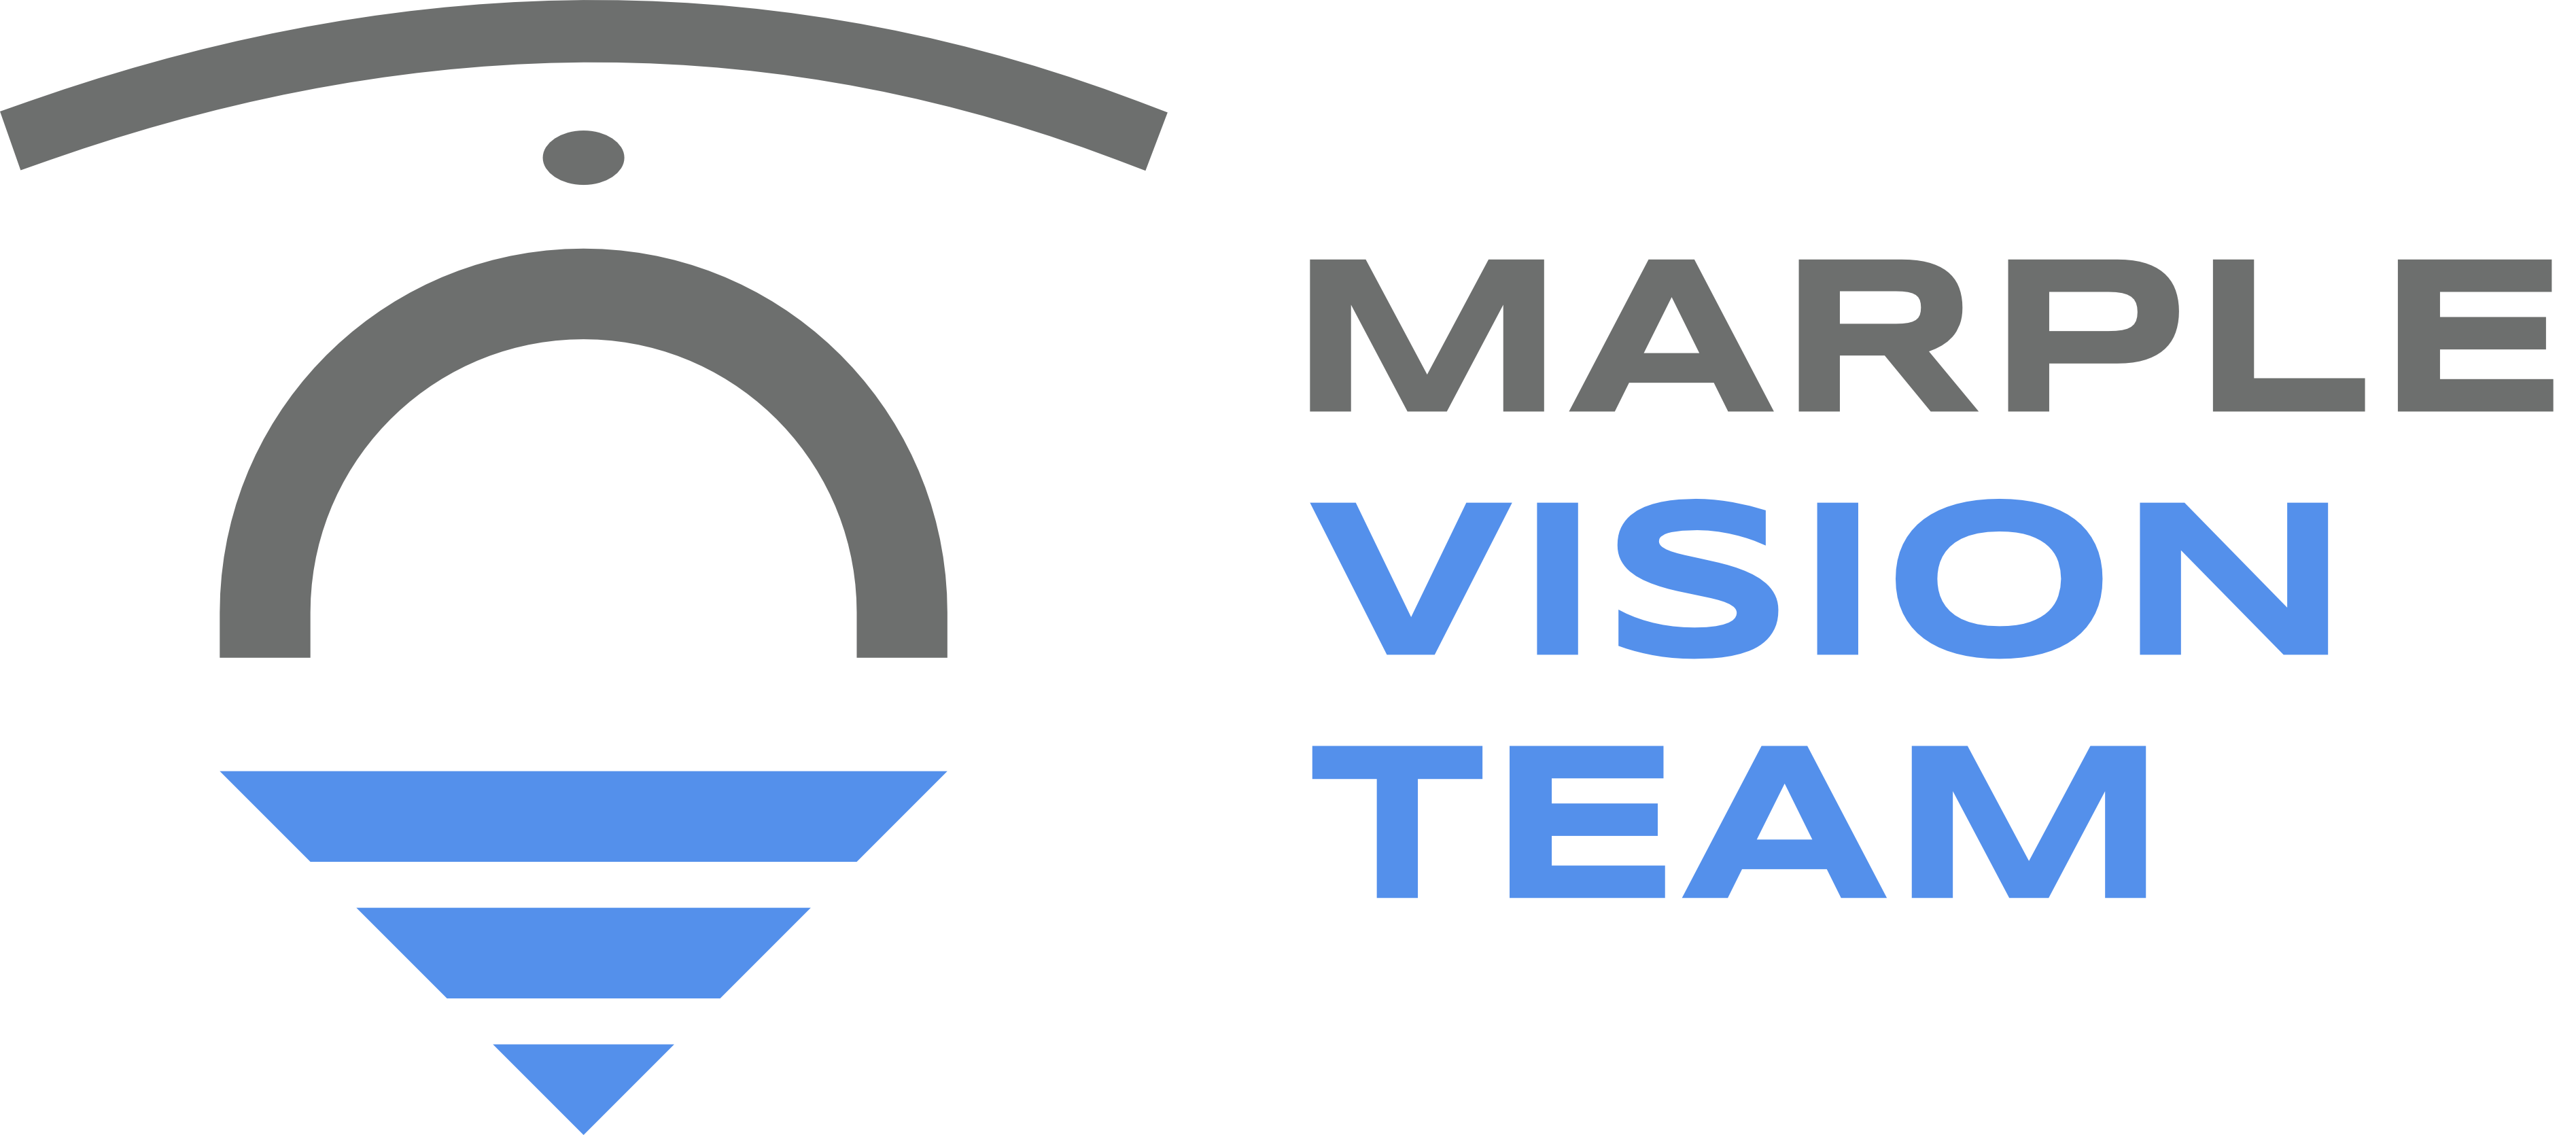 Marple Vision Team Logo